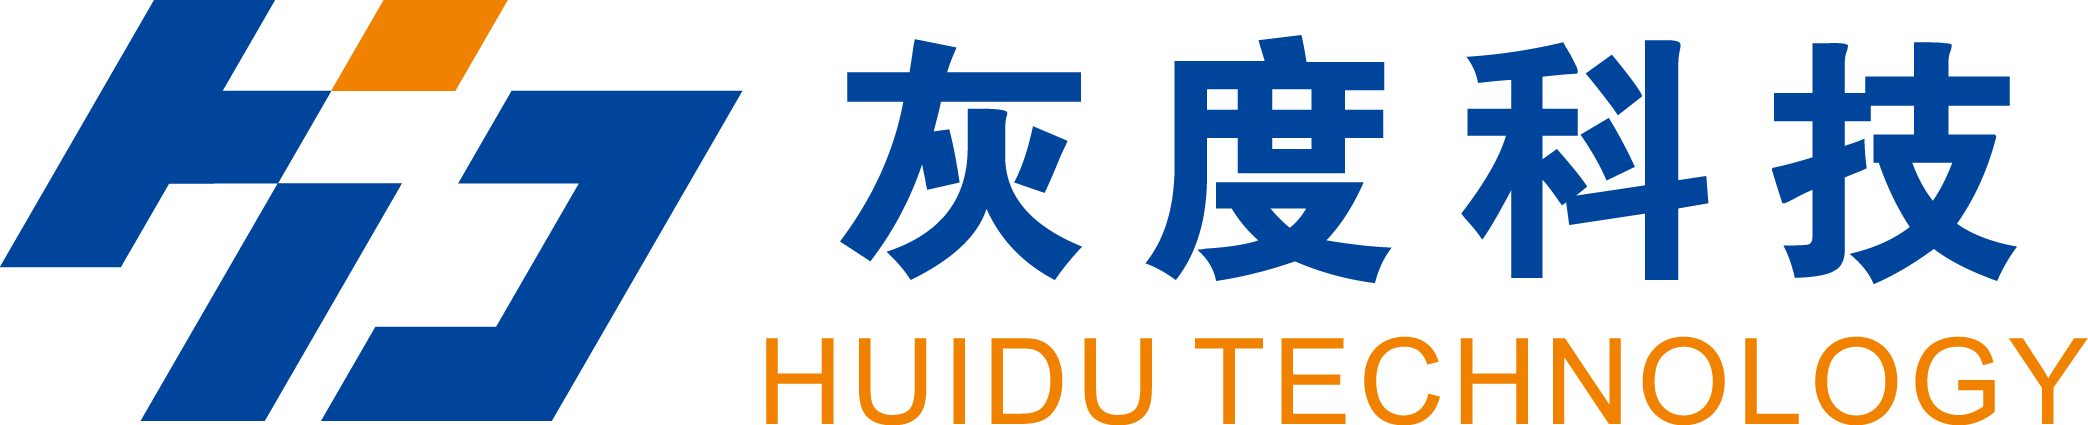 huidu large logo